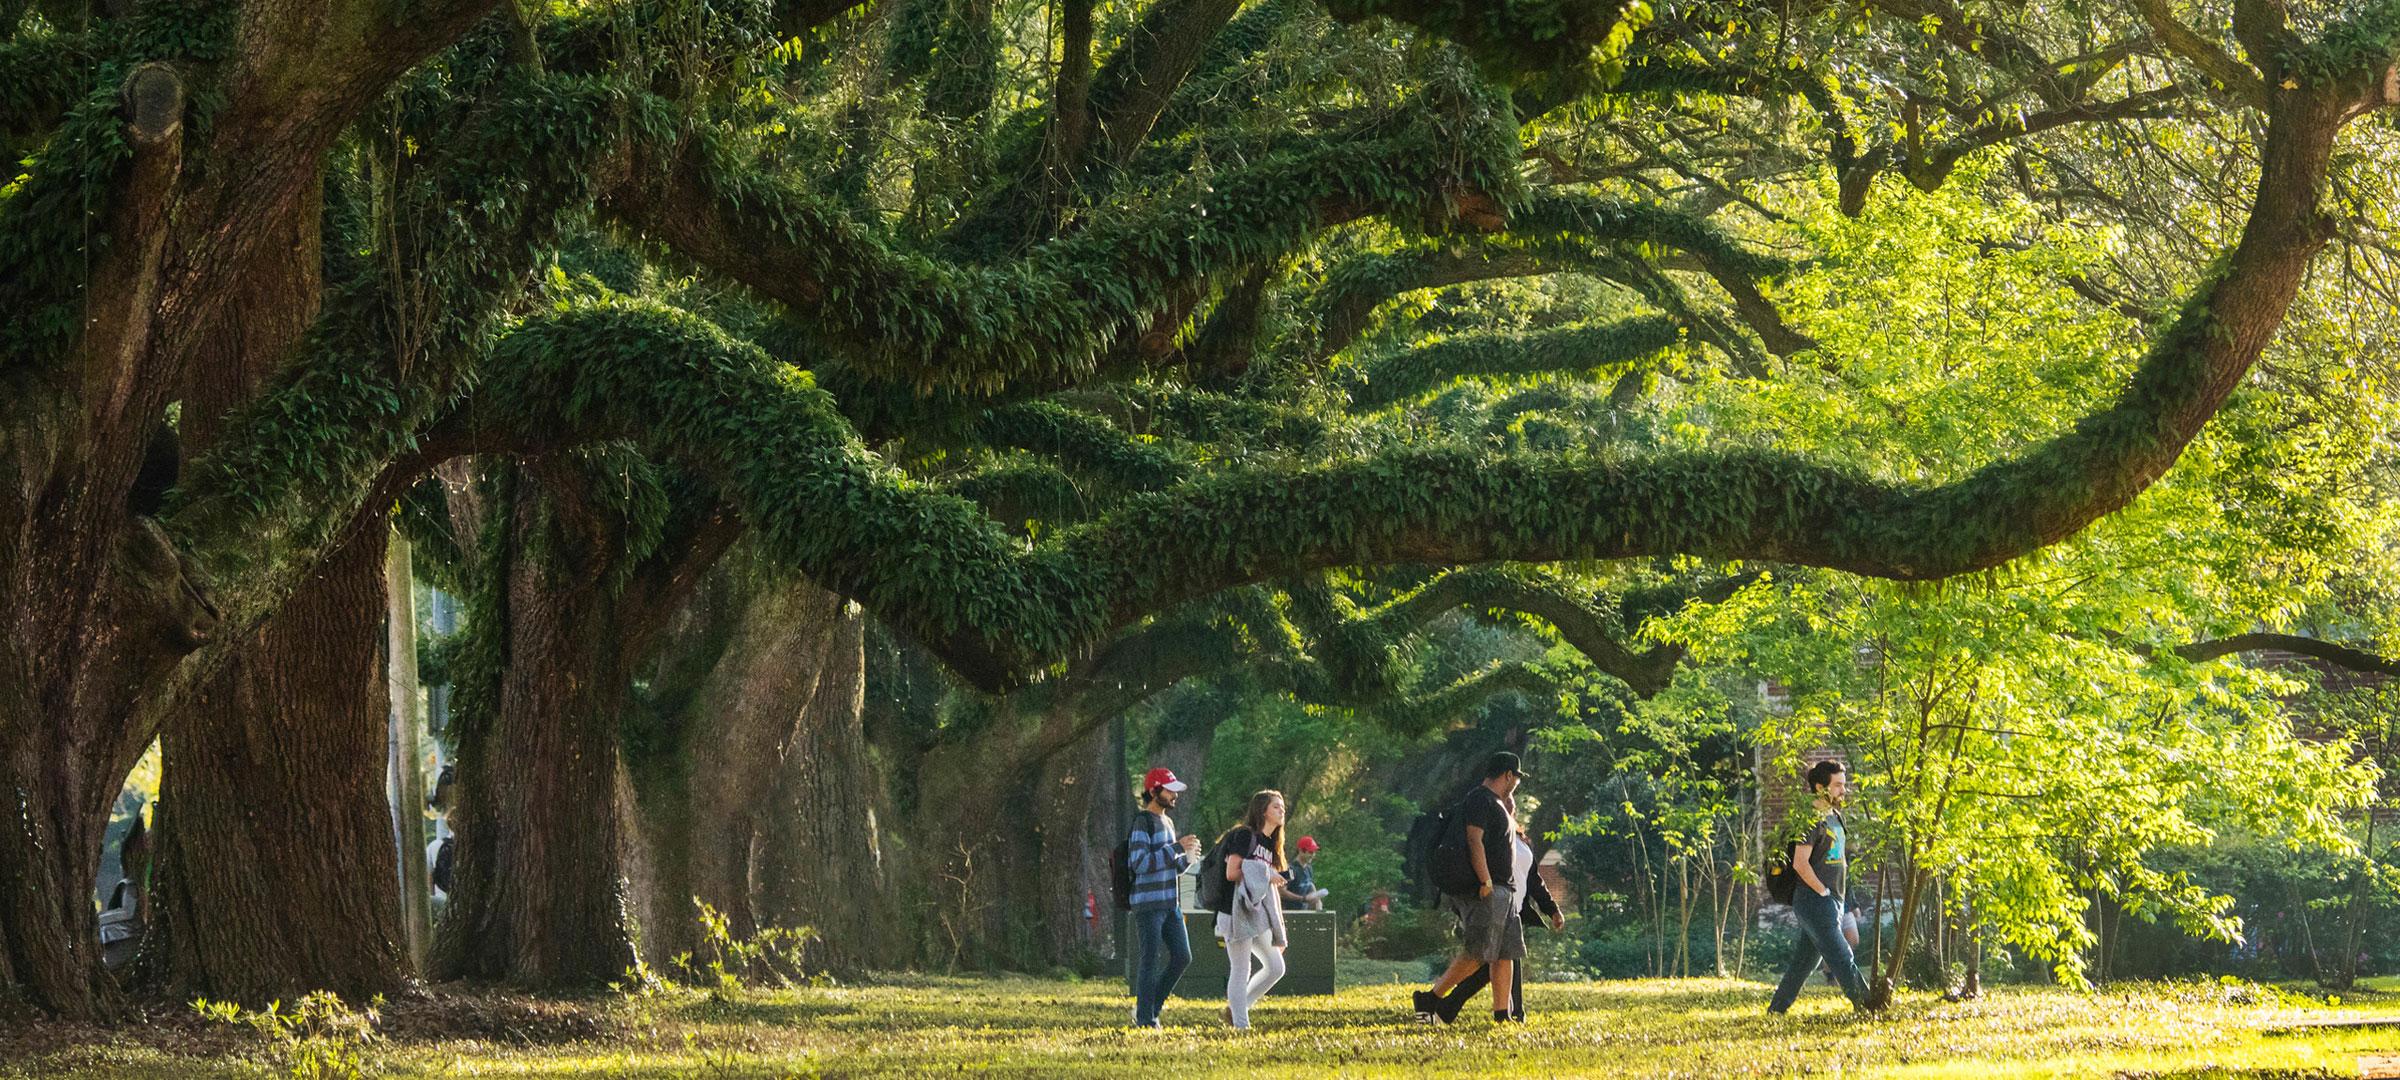 University of Louisiana at Lafayette students walking under the large oak trees on campus